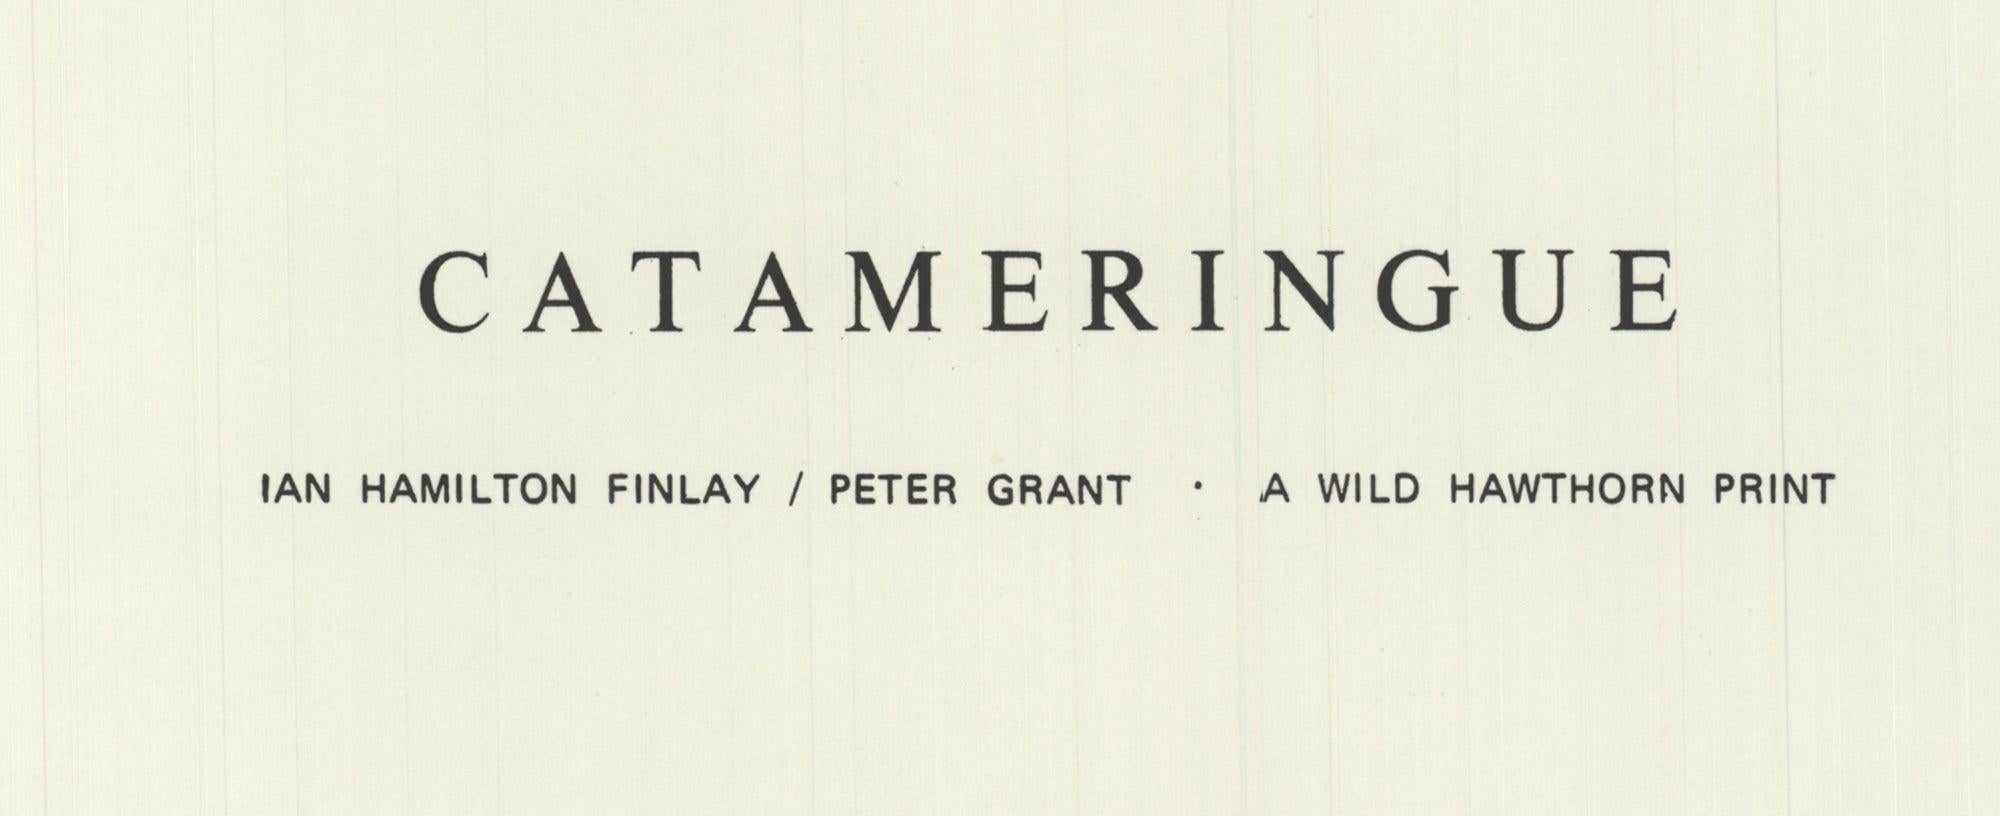 1970 Ian Hamilton Finlay 'Catameringue'  For Sale 2